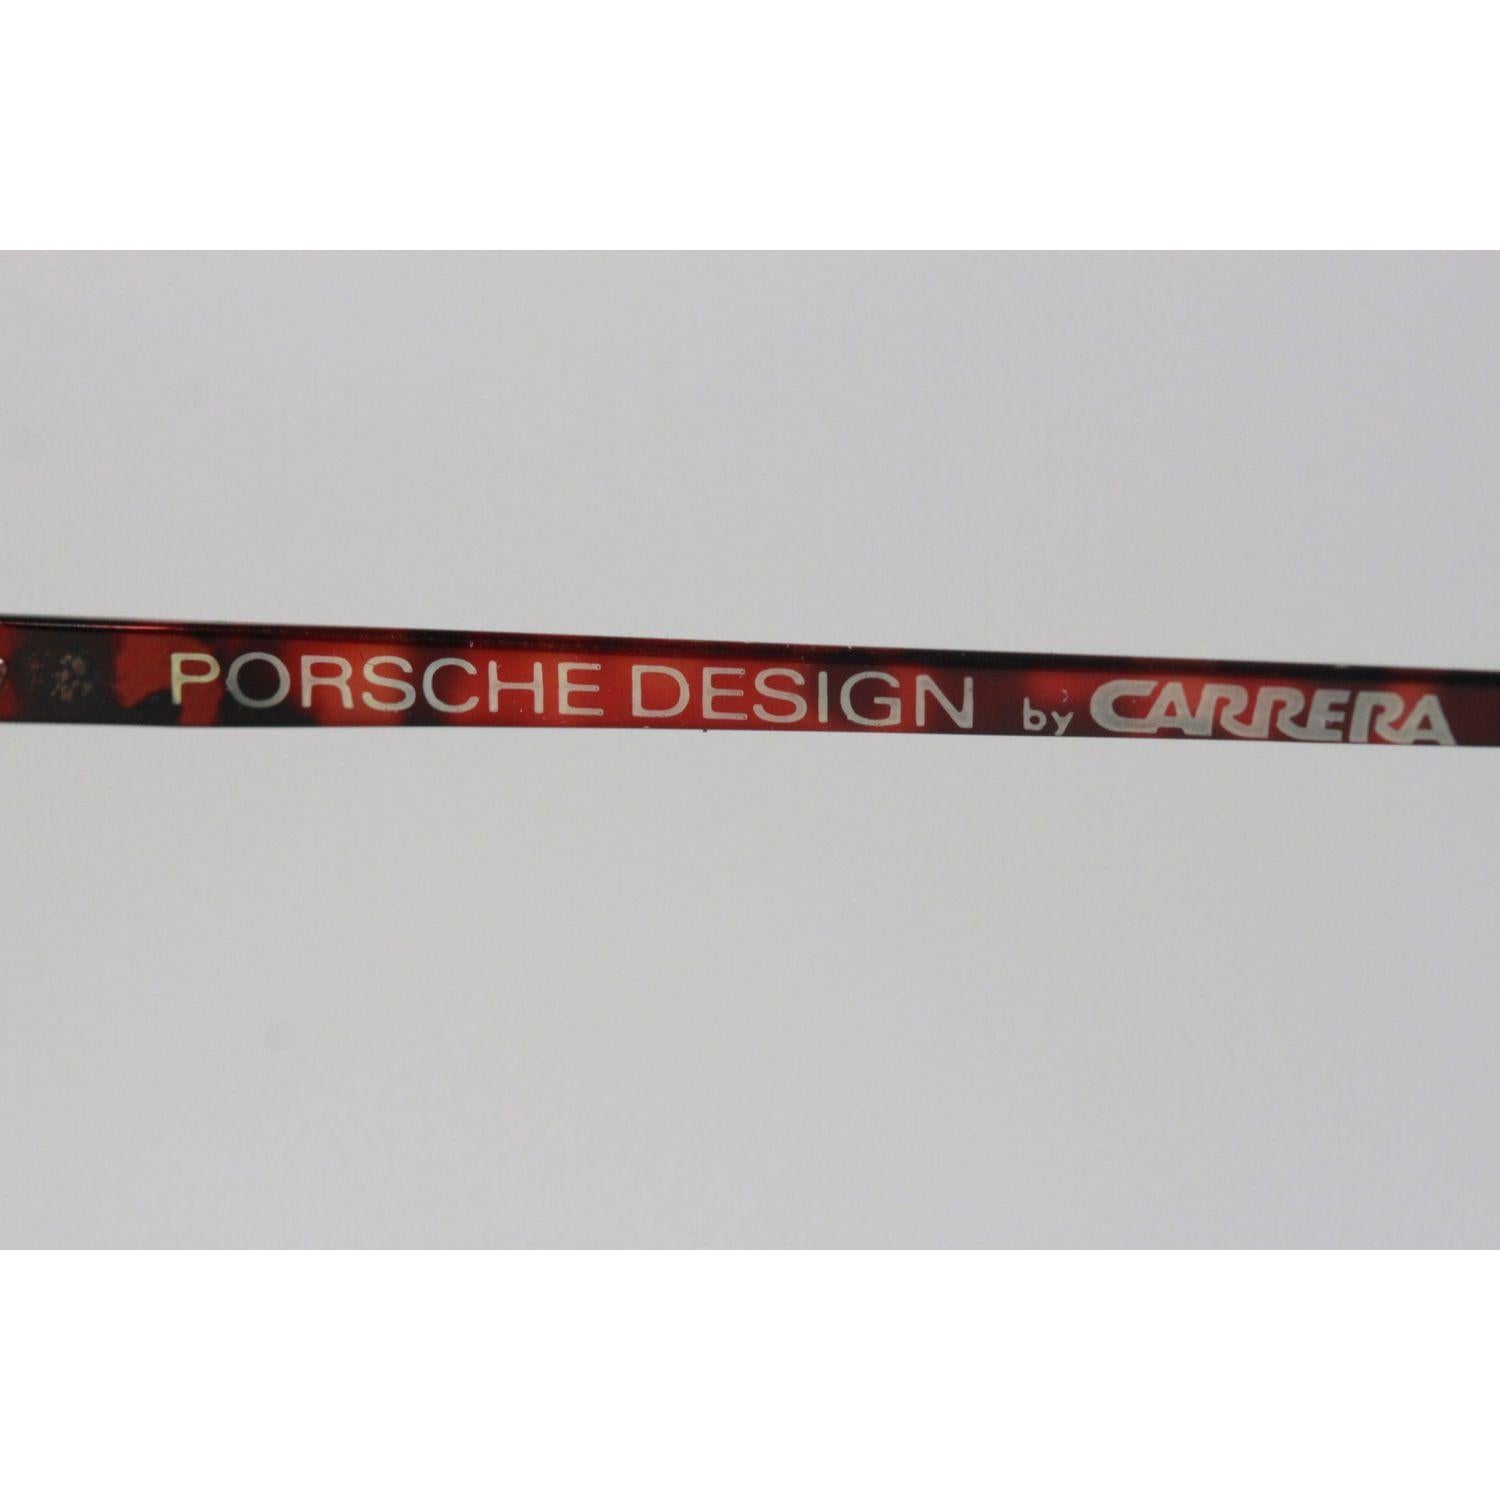 Porsche Design By Carrera Vintage Eyeglasses 5662 54mm New Old Stock 8